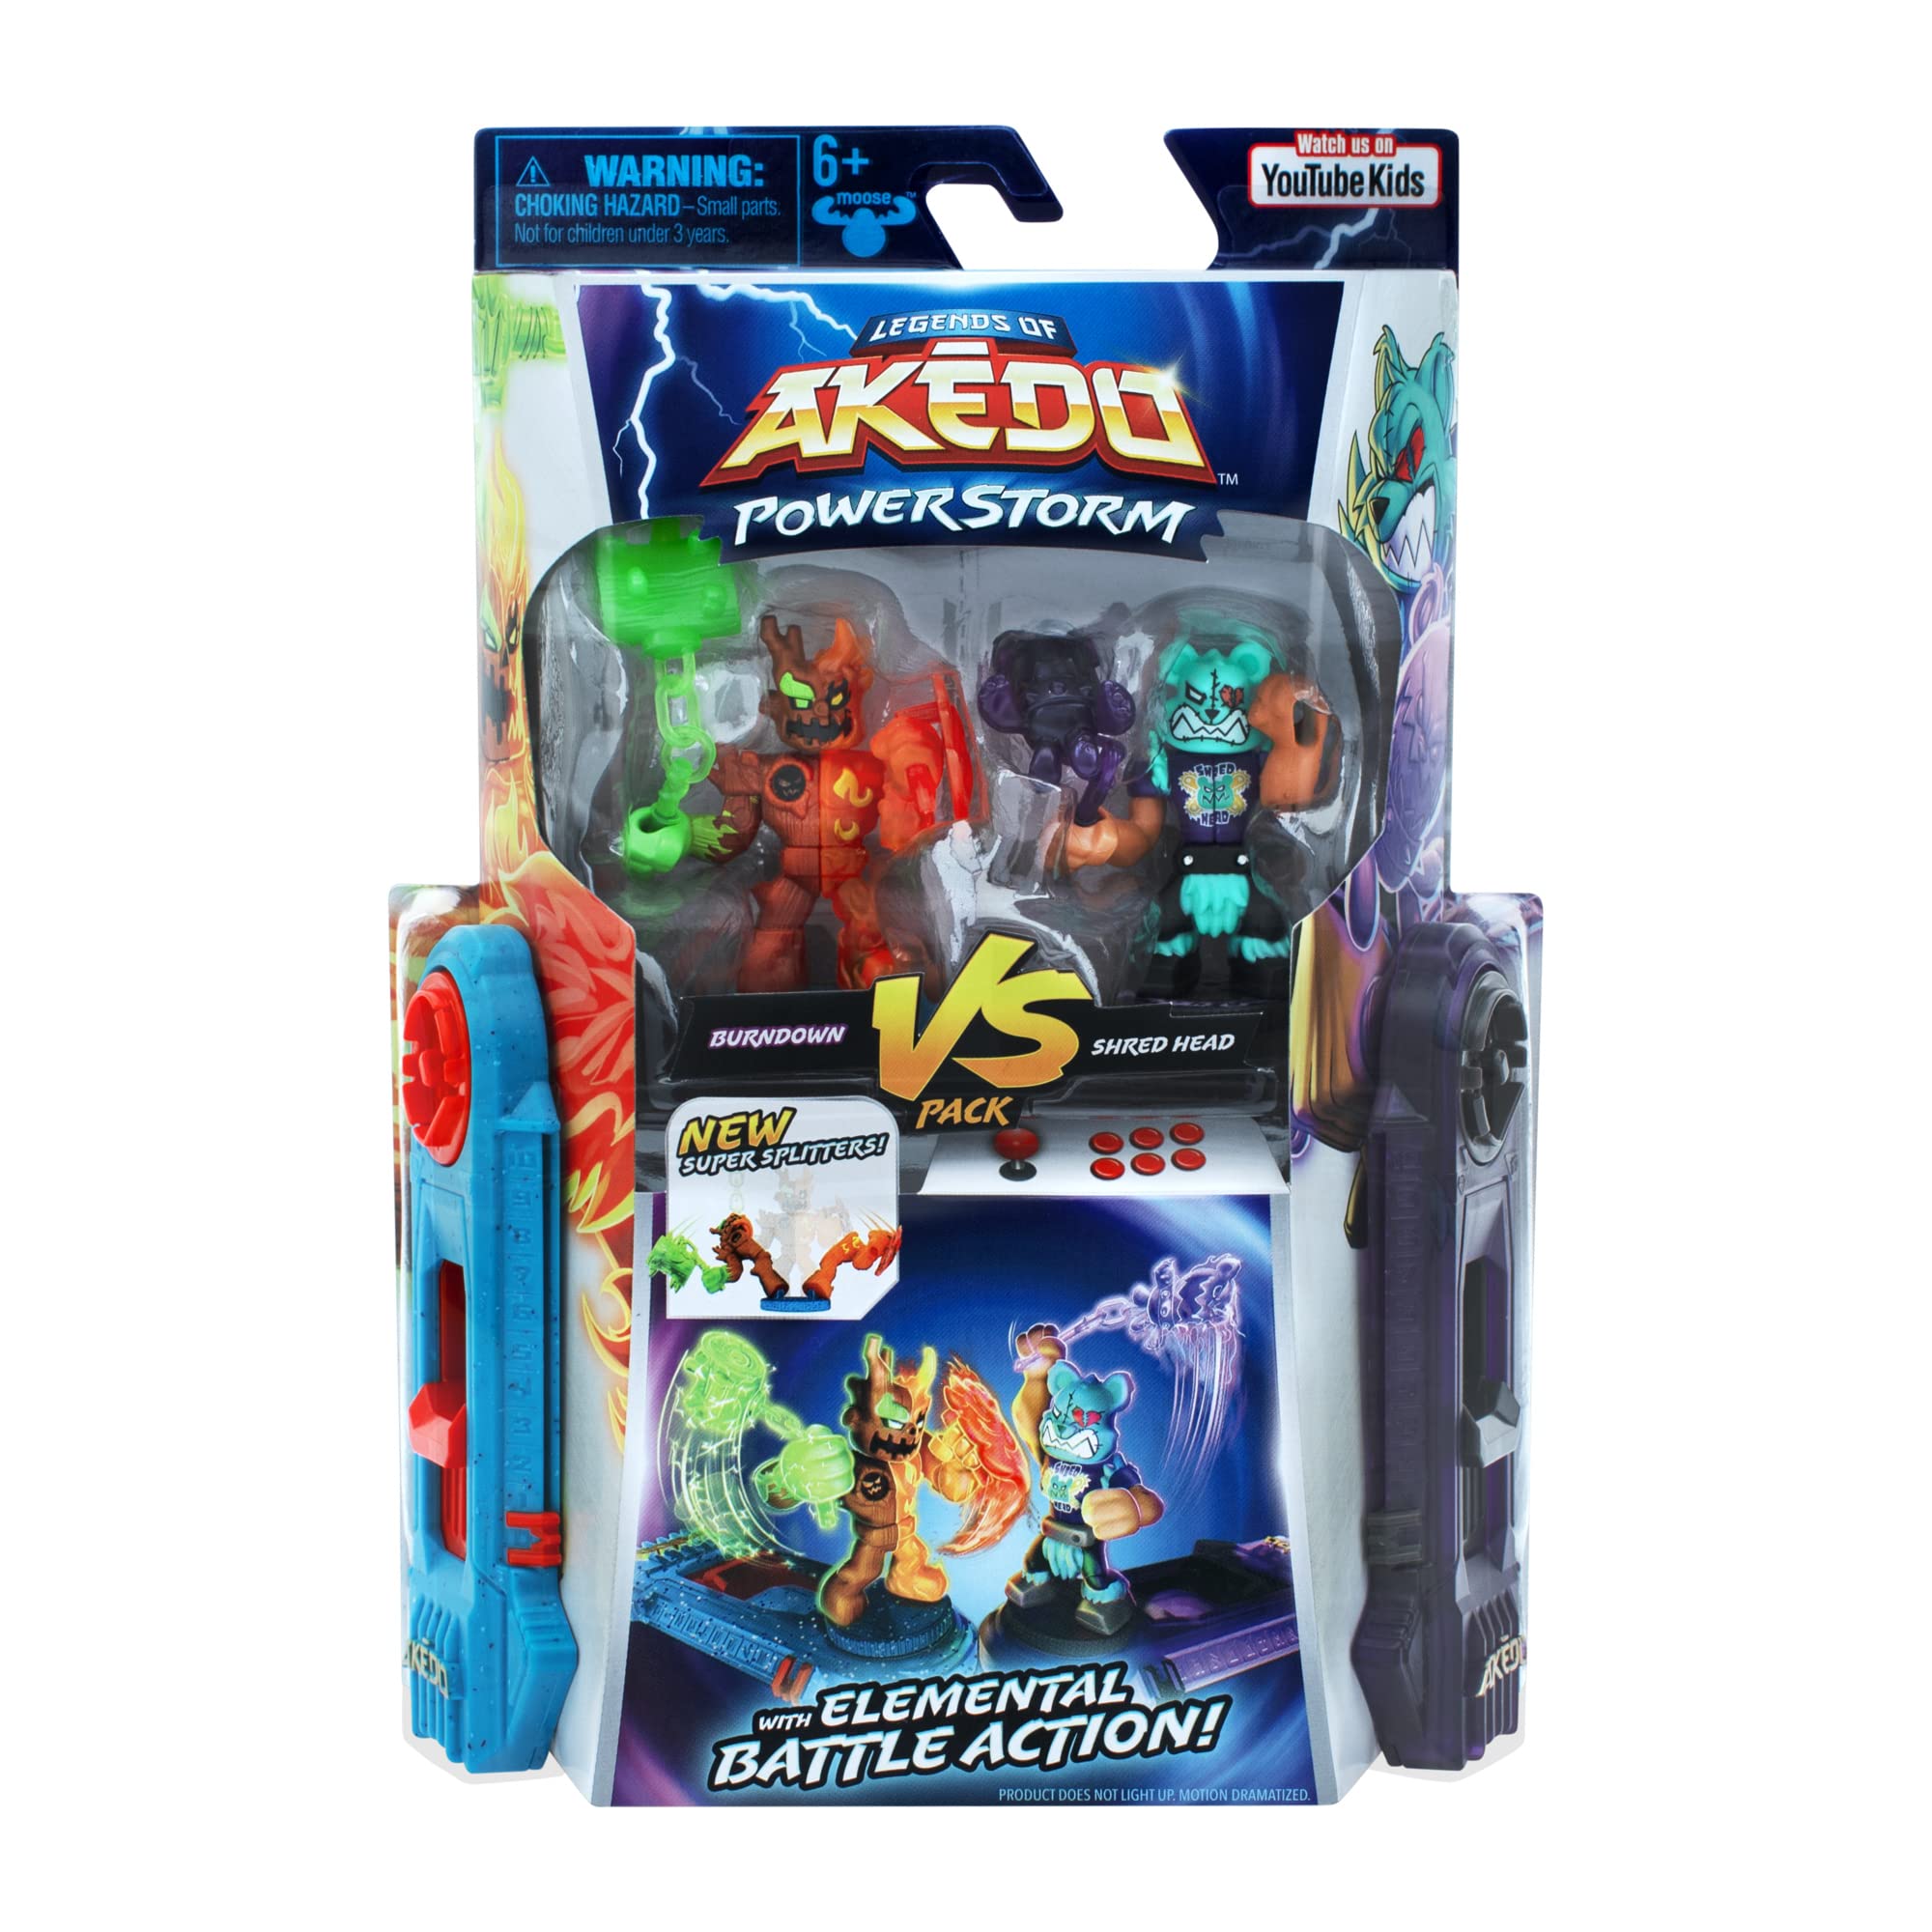 Legends of Akedo Power Storm - Versus Pack - 2 Mini Battling Warriors and 2 Battle Controllers - Burndown Versus Shred Head